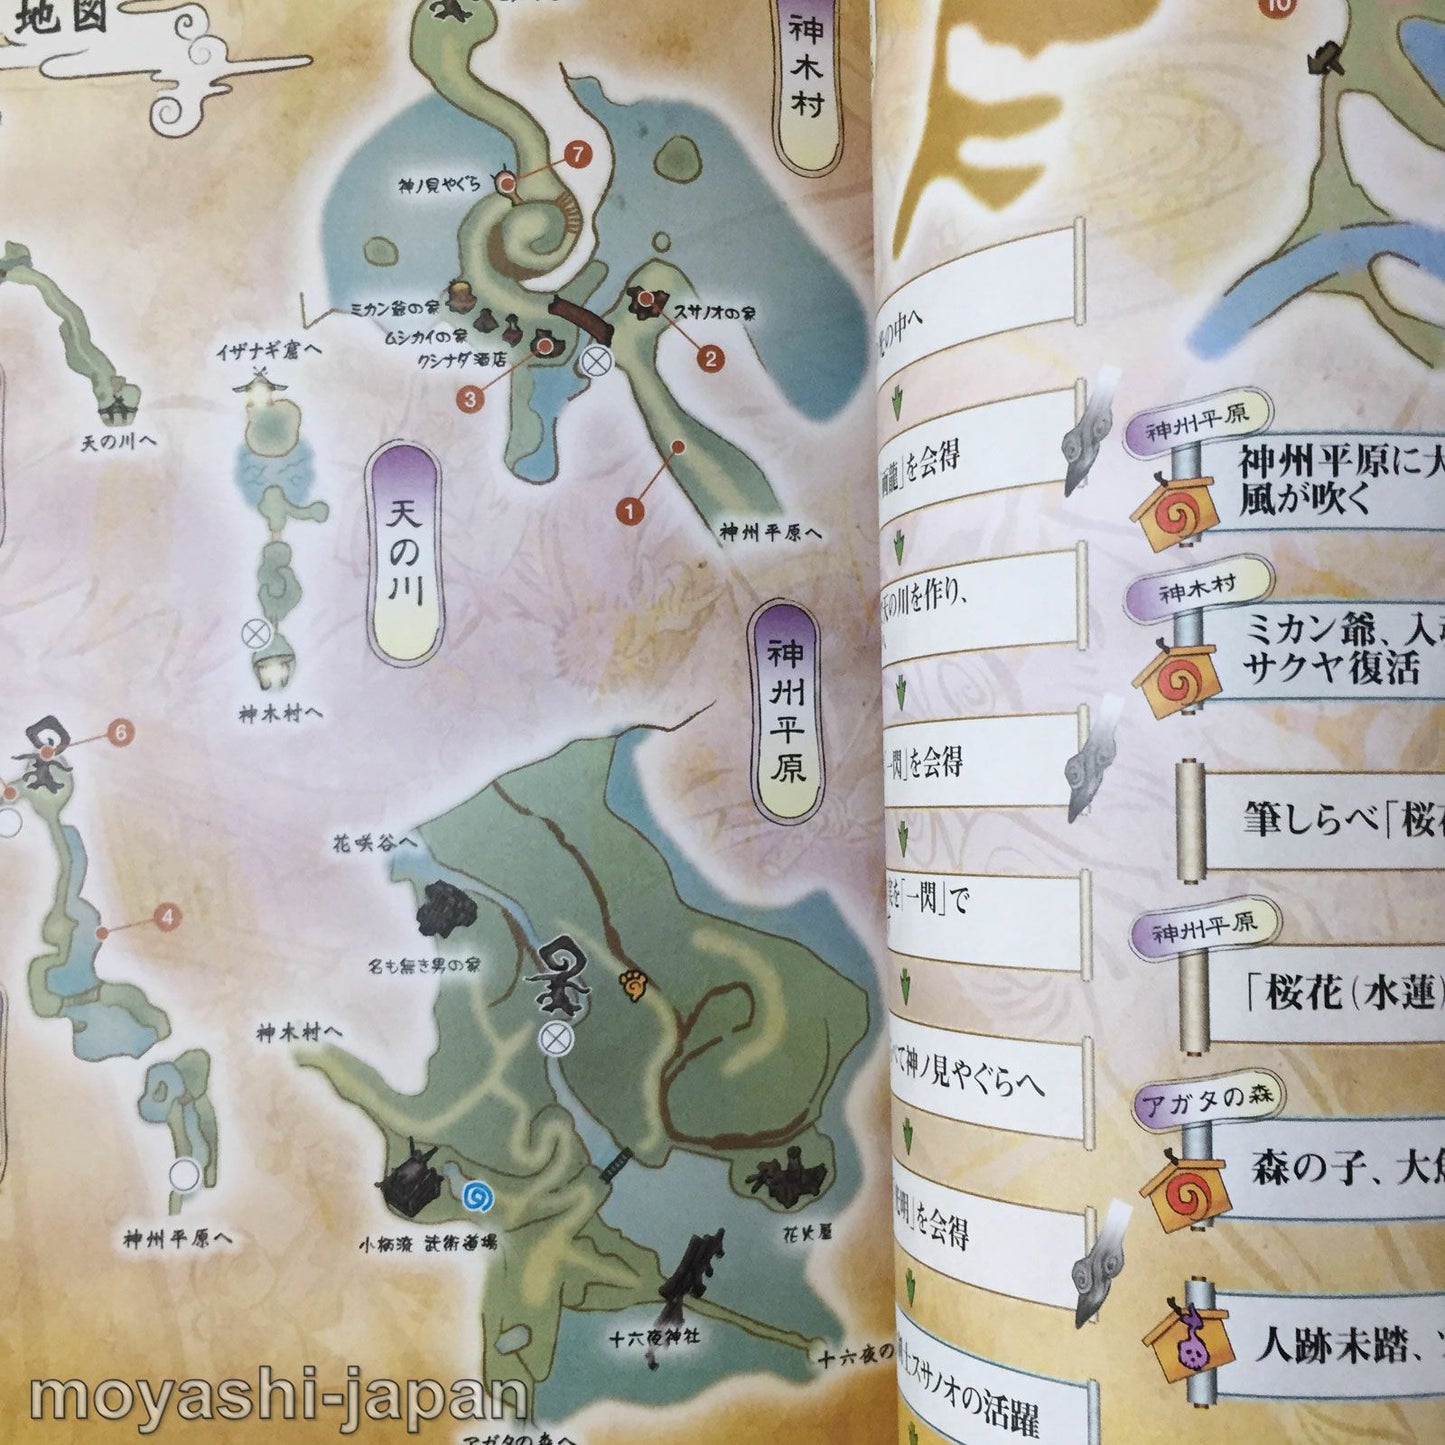 Okami Strategy Guide Book